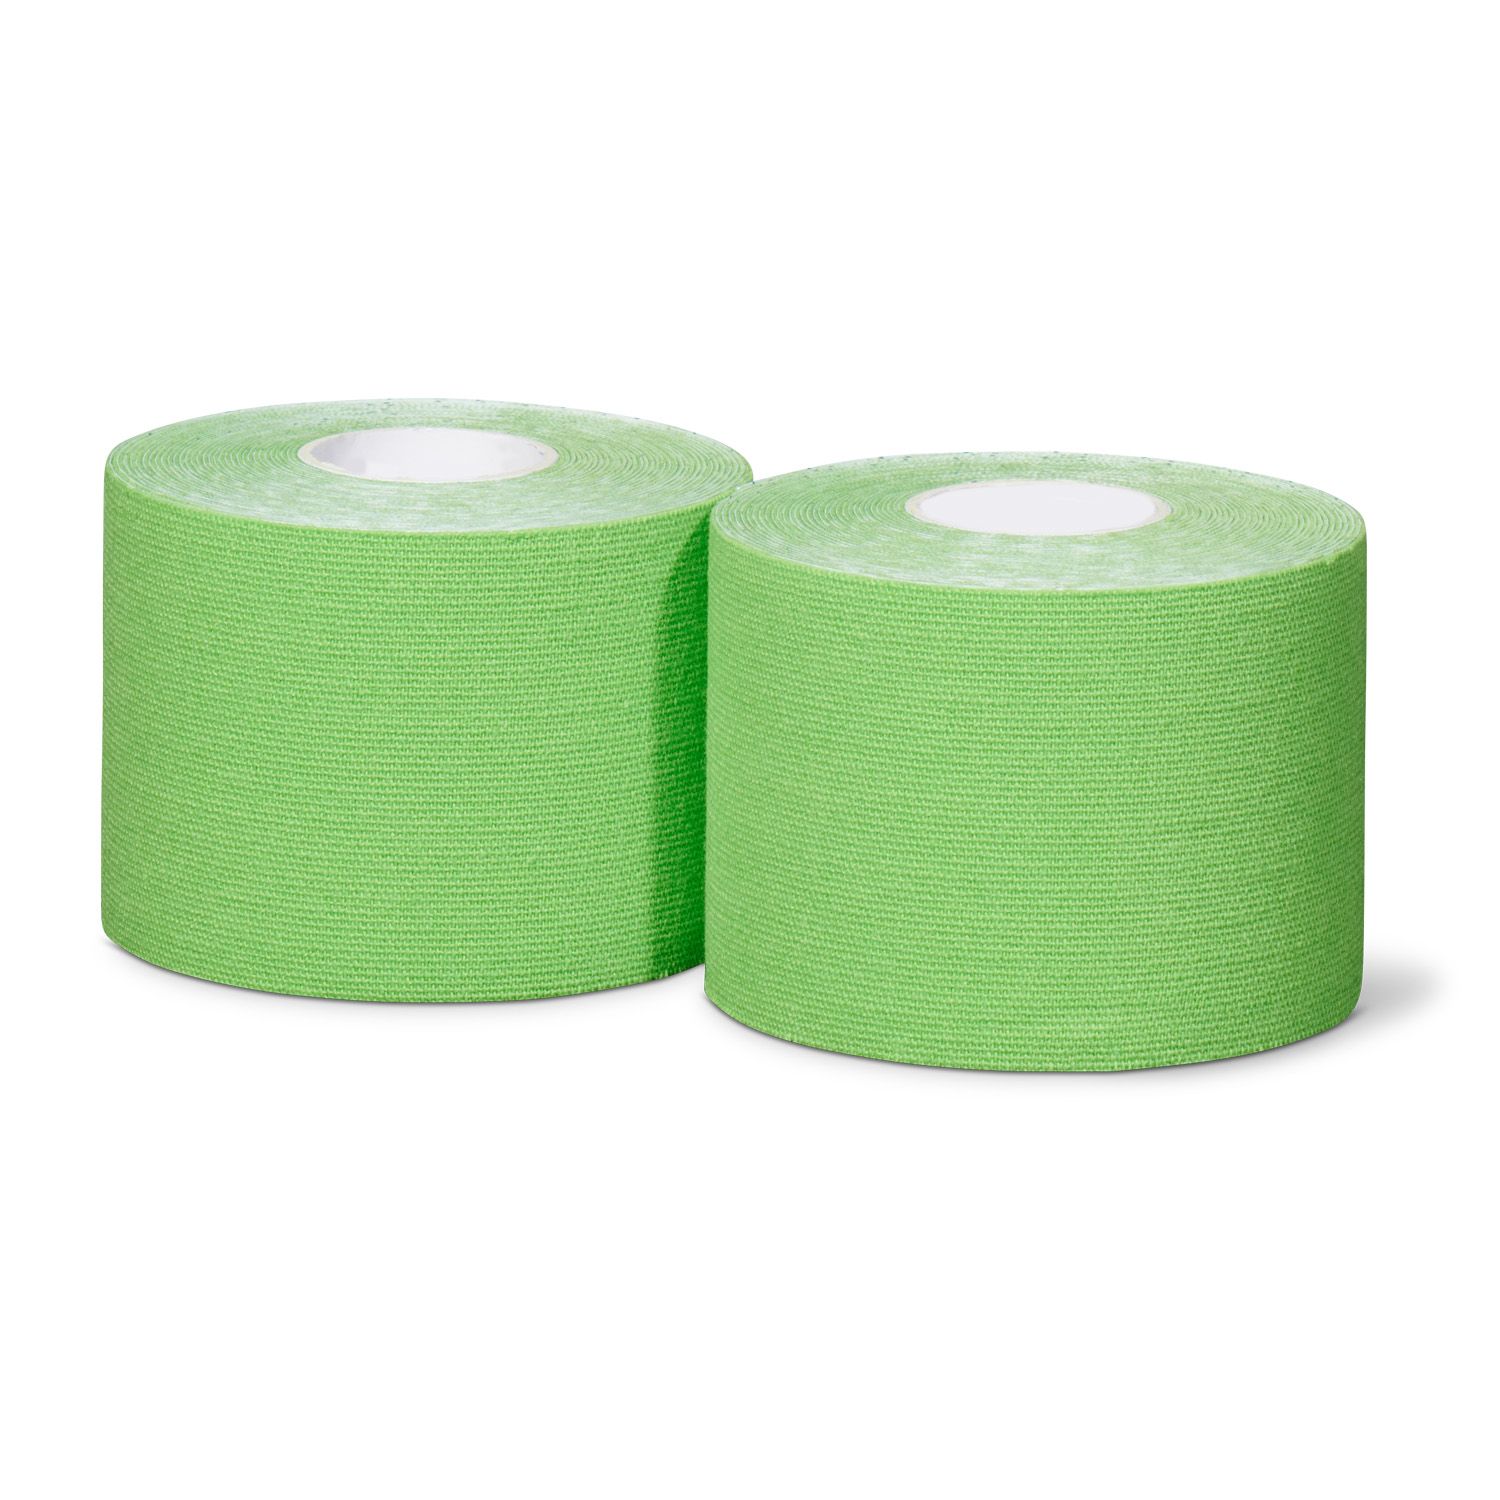 gladiator sports kinesiology tape twelve rolls green